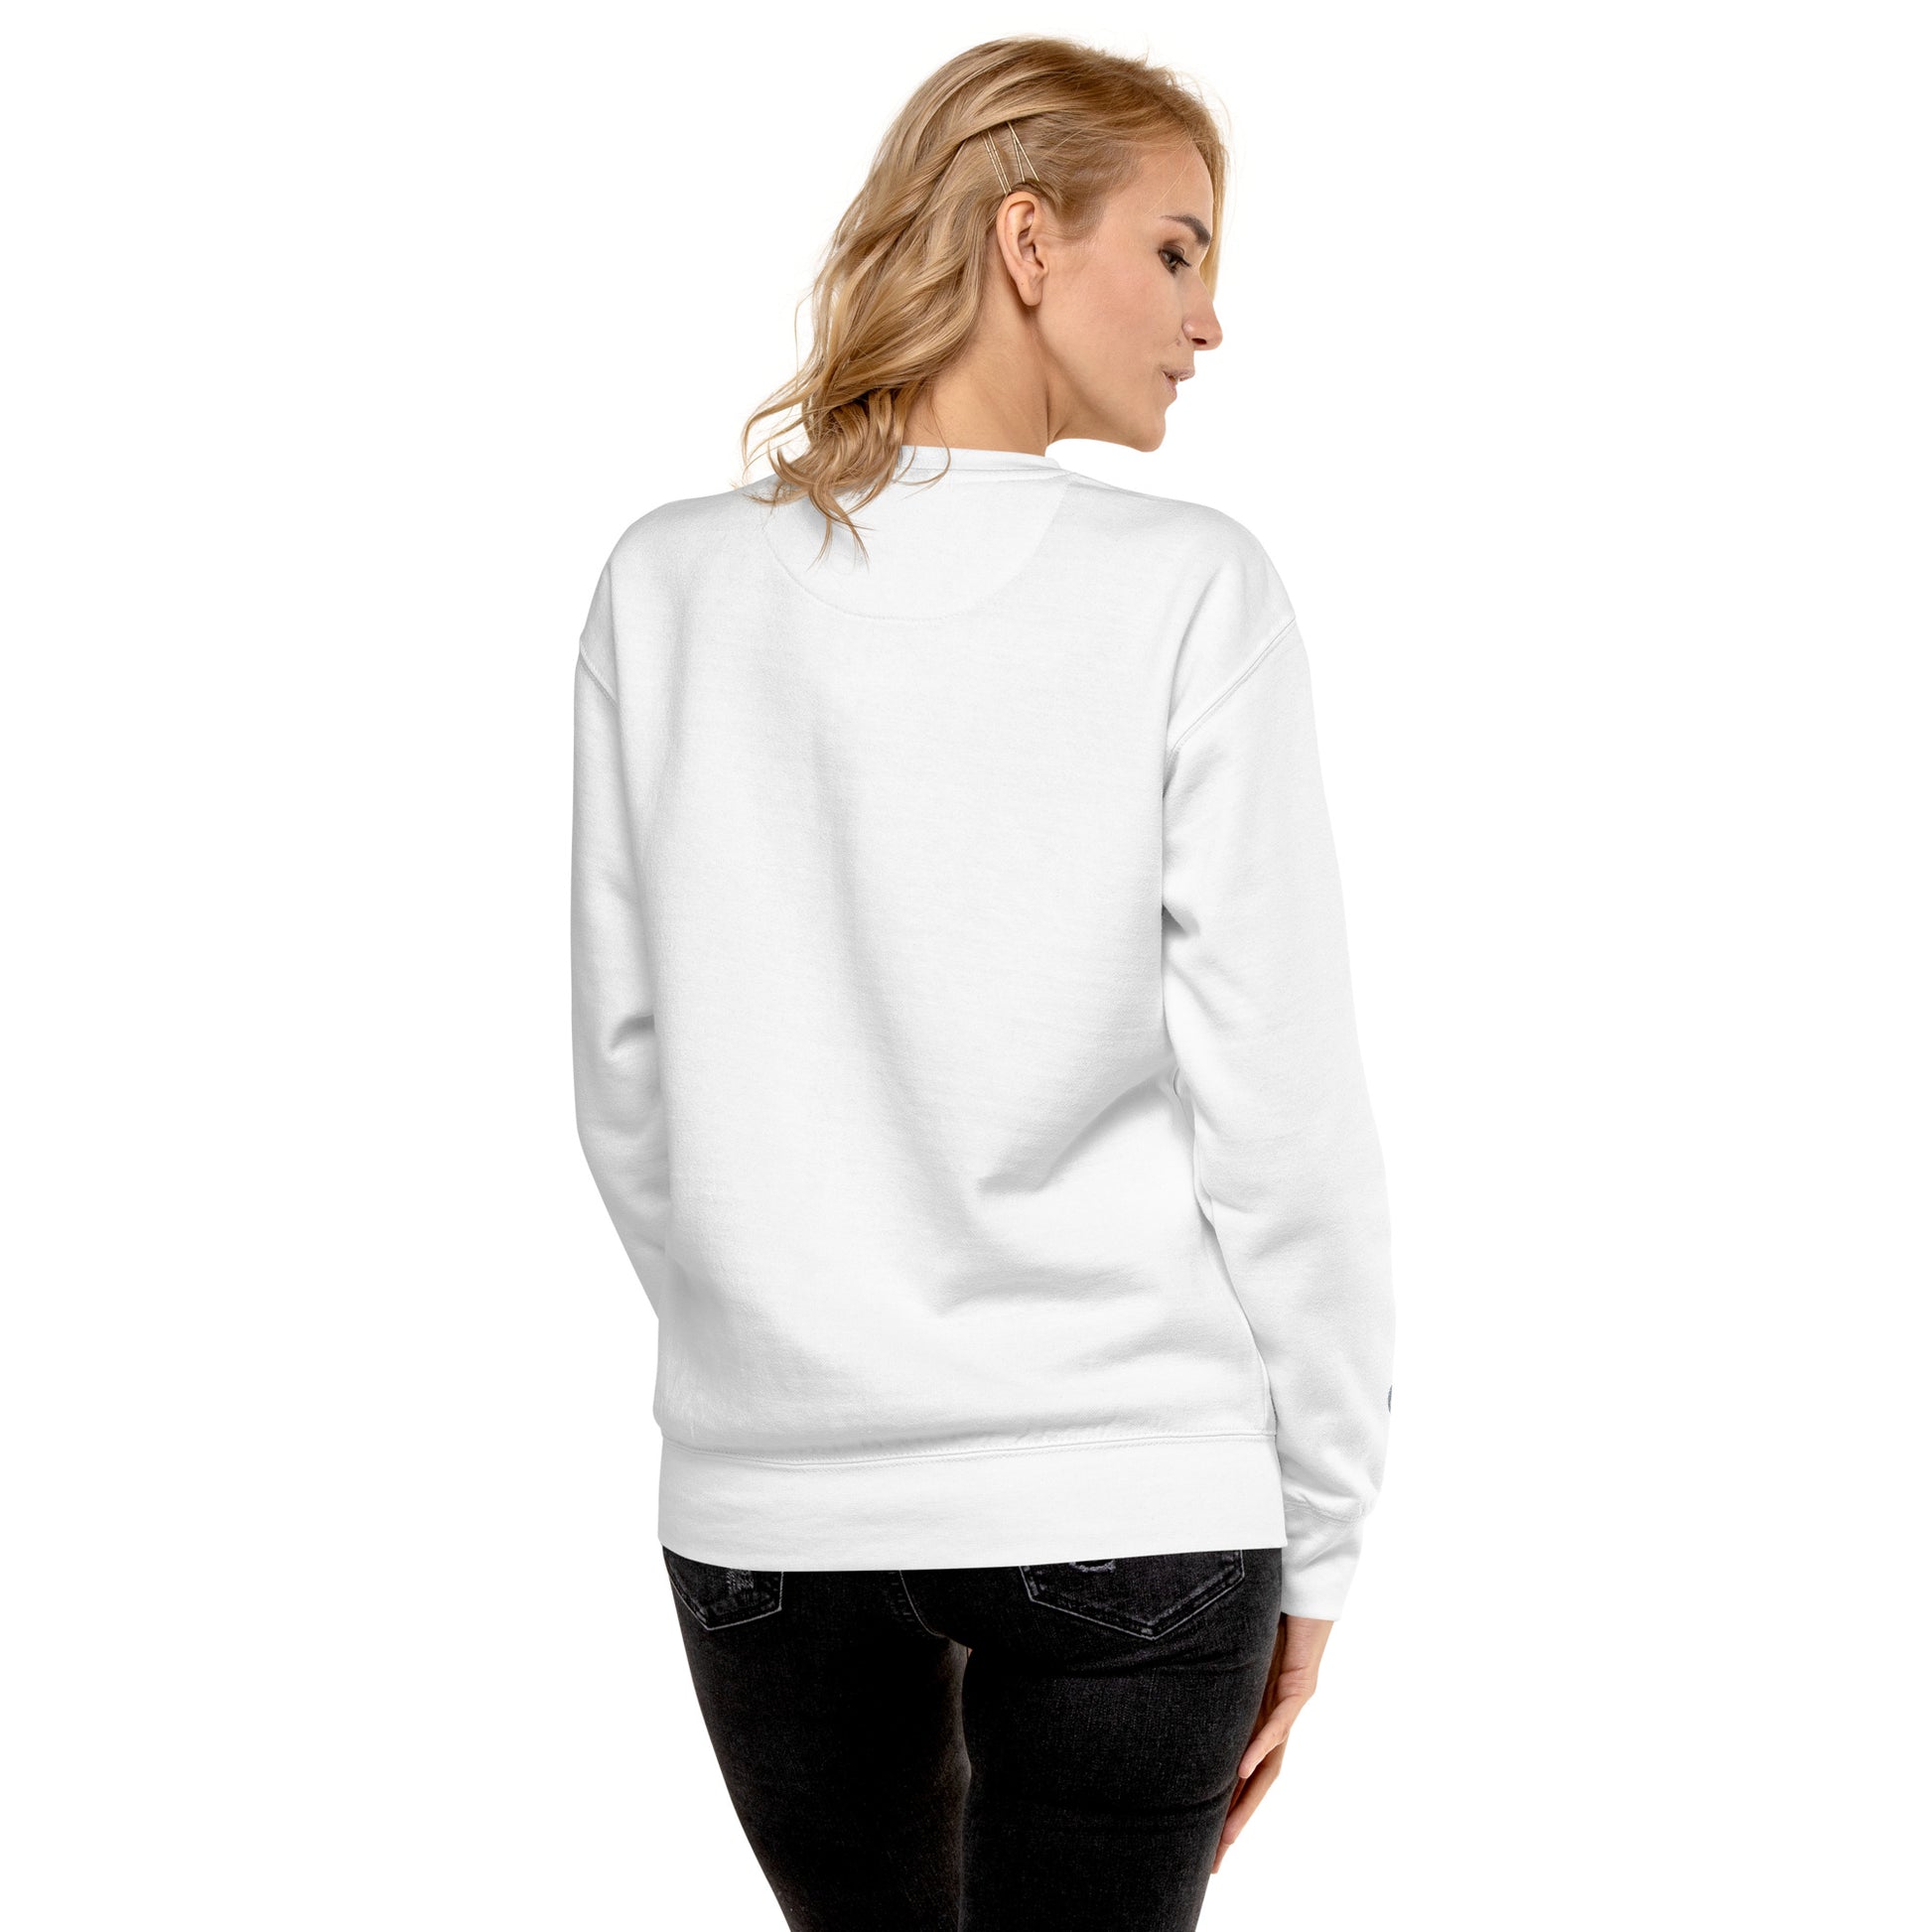 TIME OF VIBES - Premium Sweatshirt CITY MUNICH (White/Grey) - €59.00